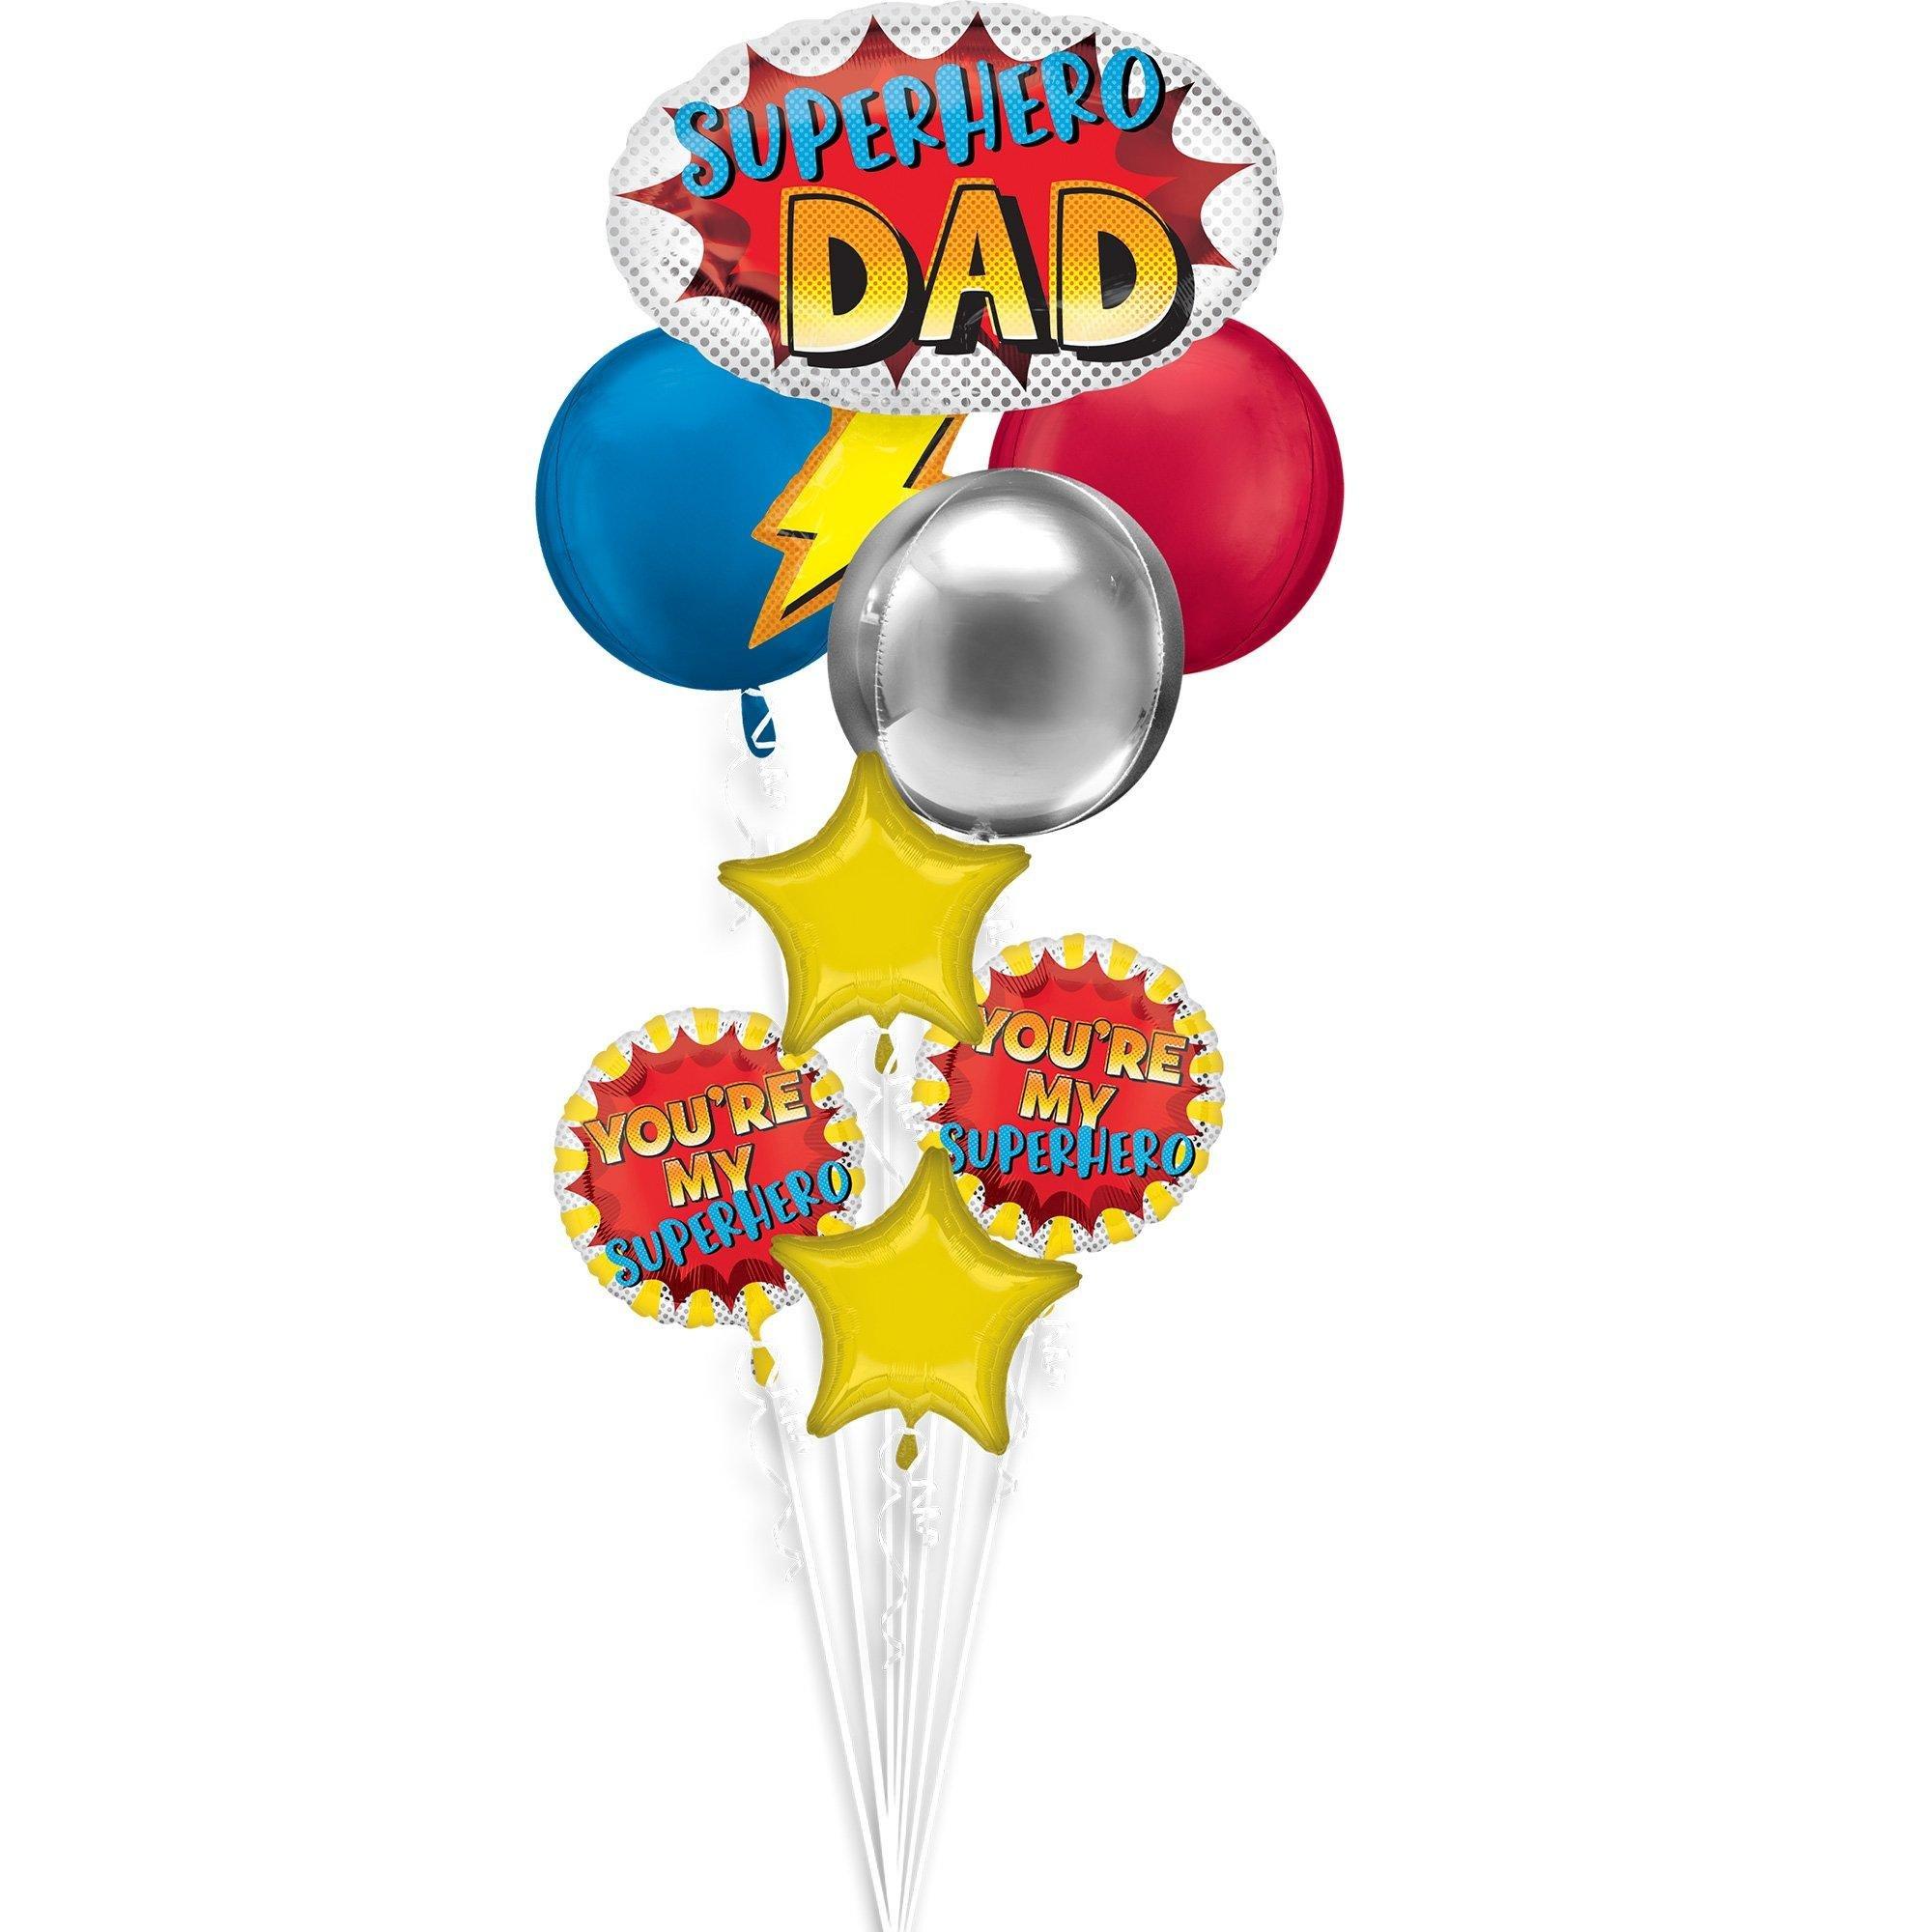 Superhero Dad Premium Balloon Bouquet with Gold Dad Balloon Weight, 9pc